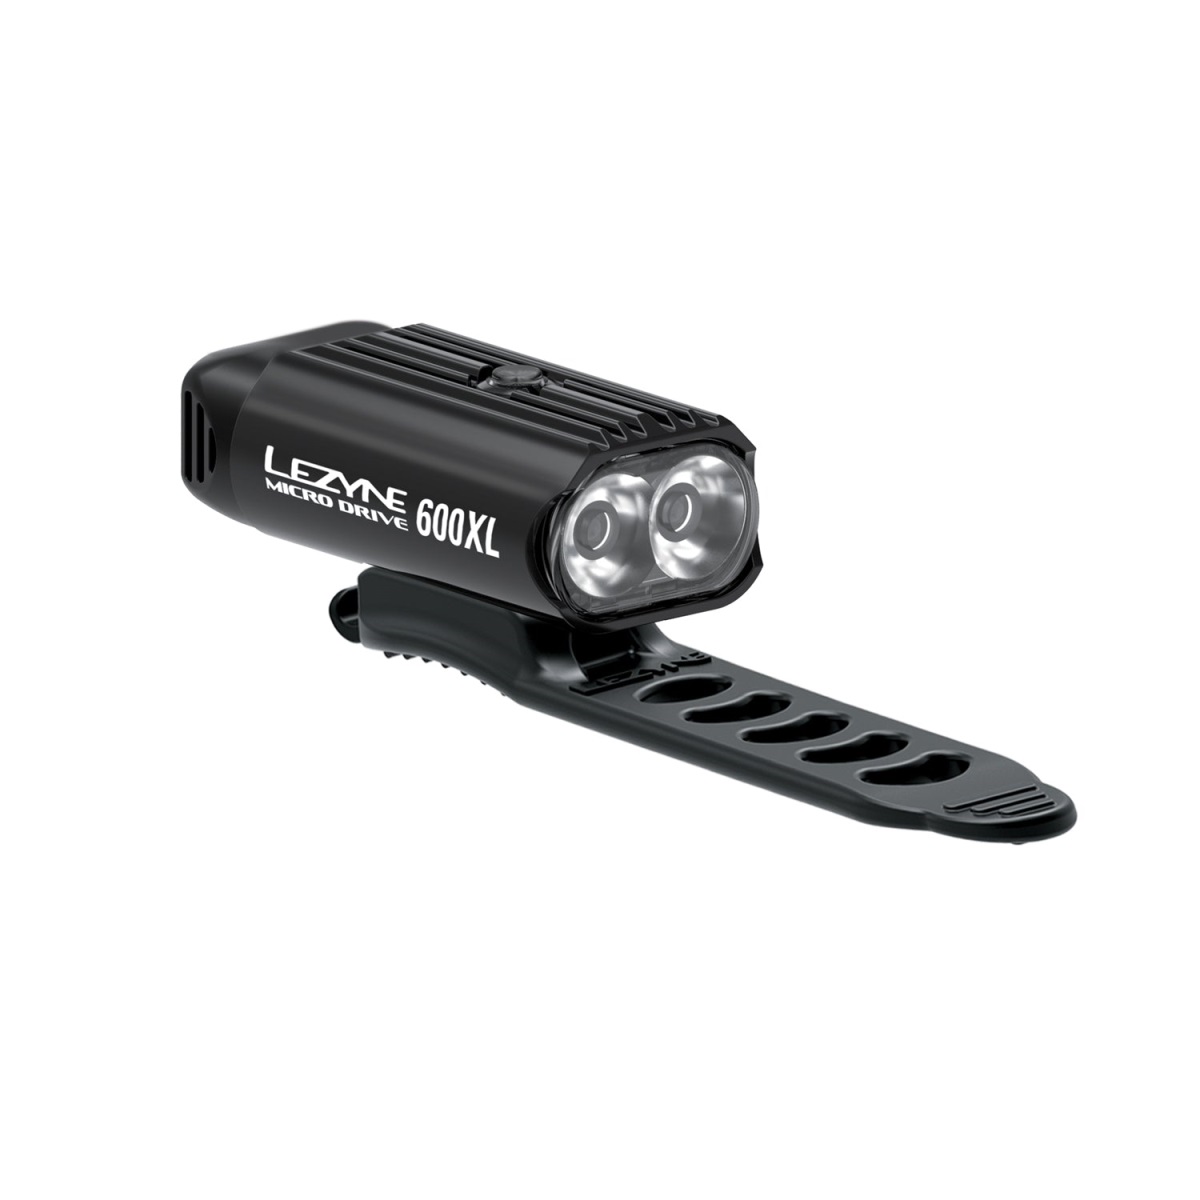 Světlo Lezyne Micro Drive 600XL black/hi-gloss